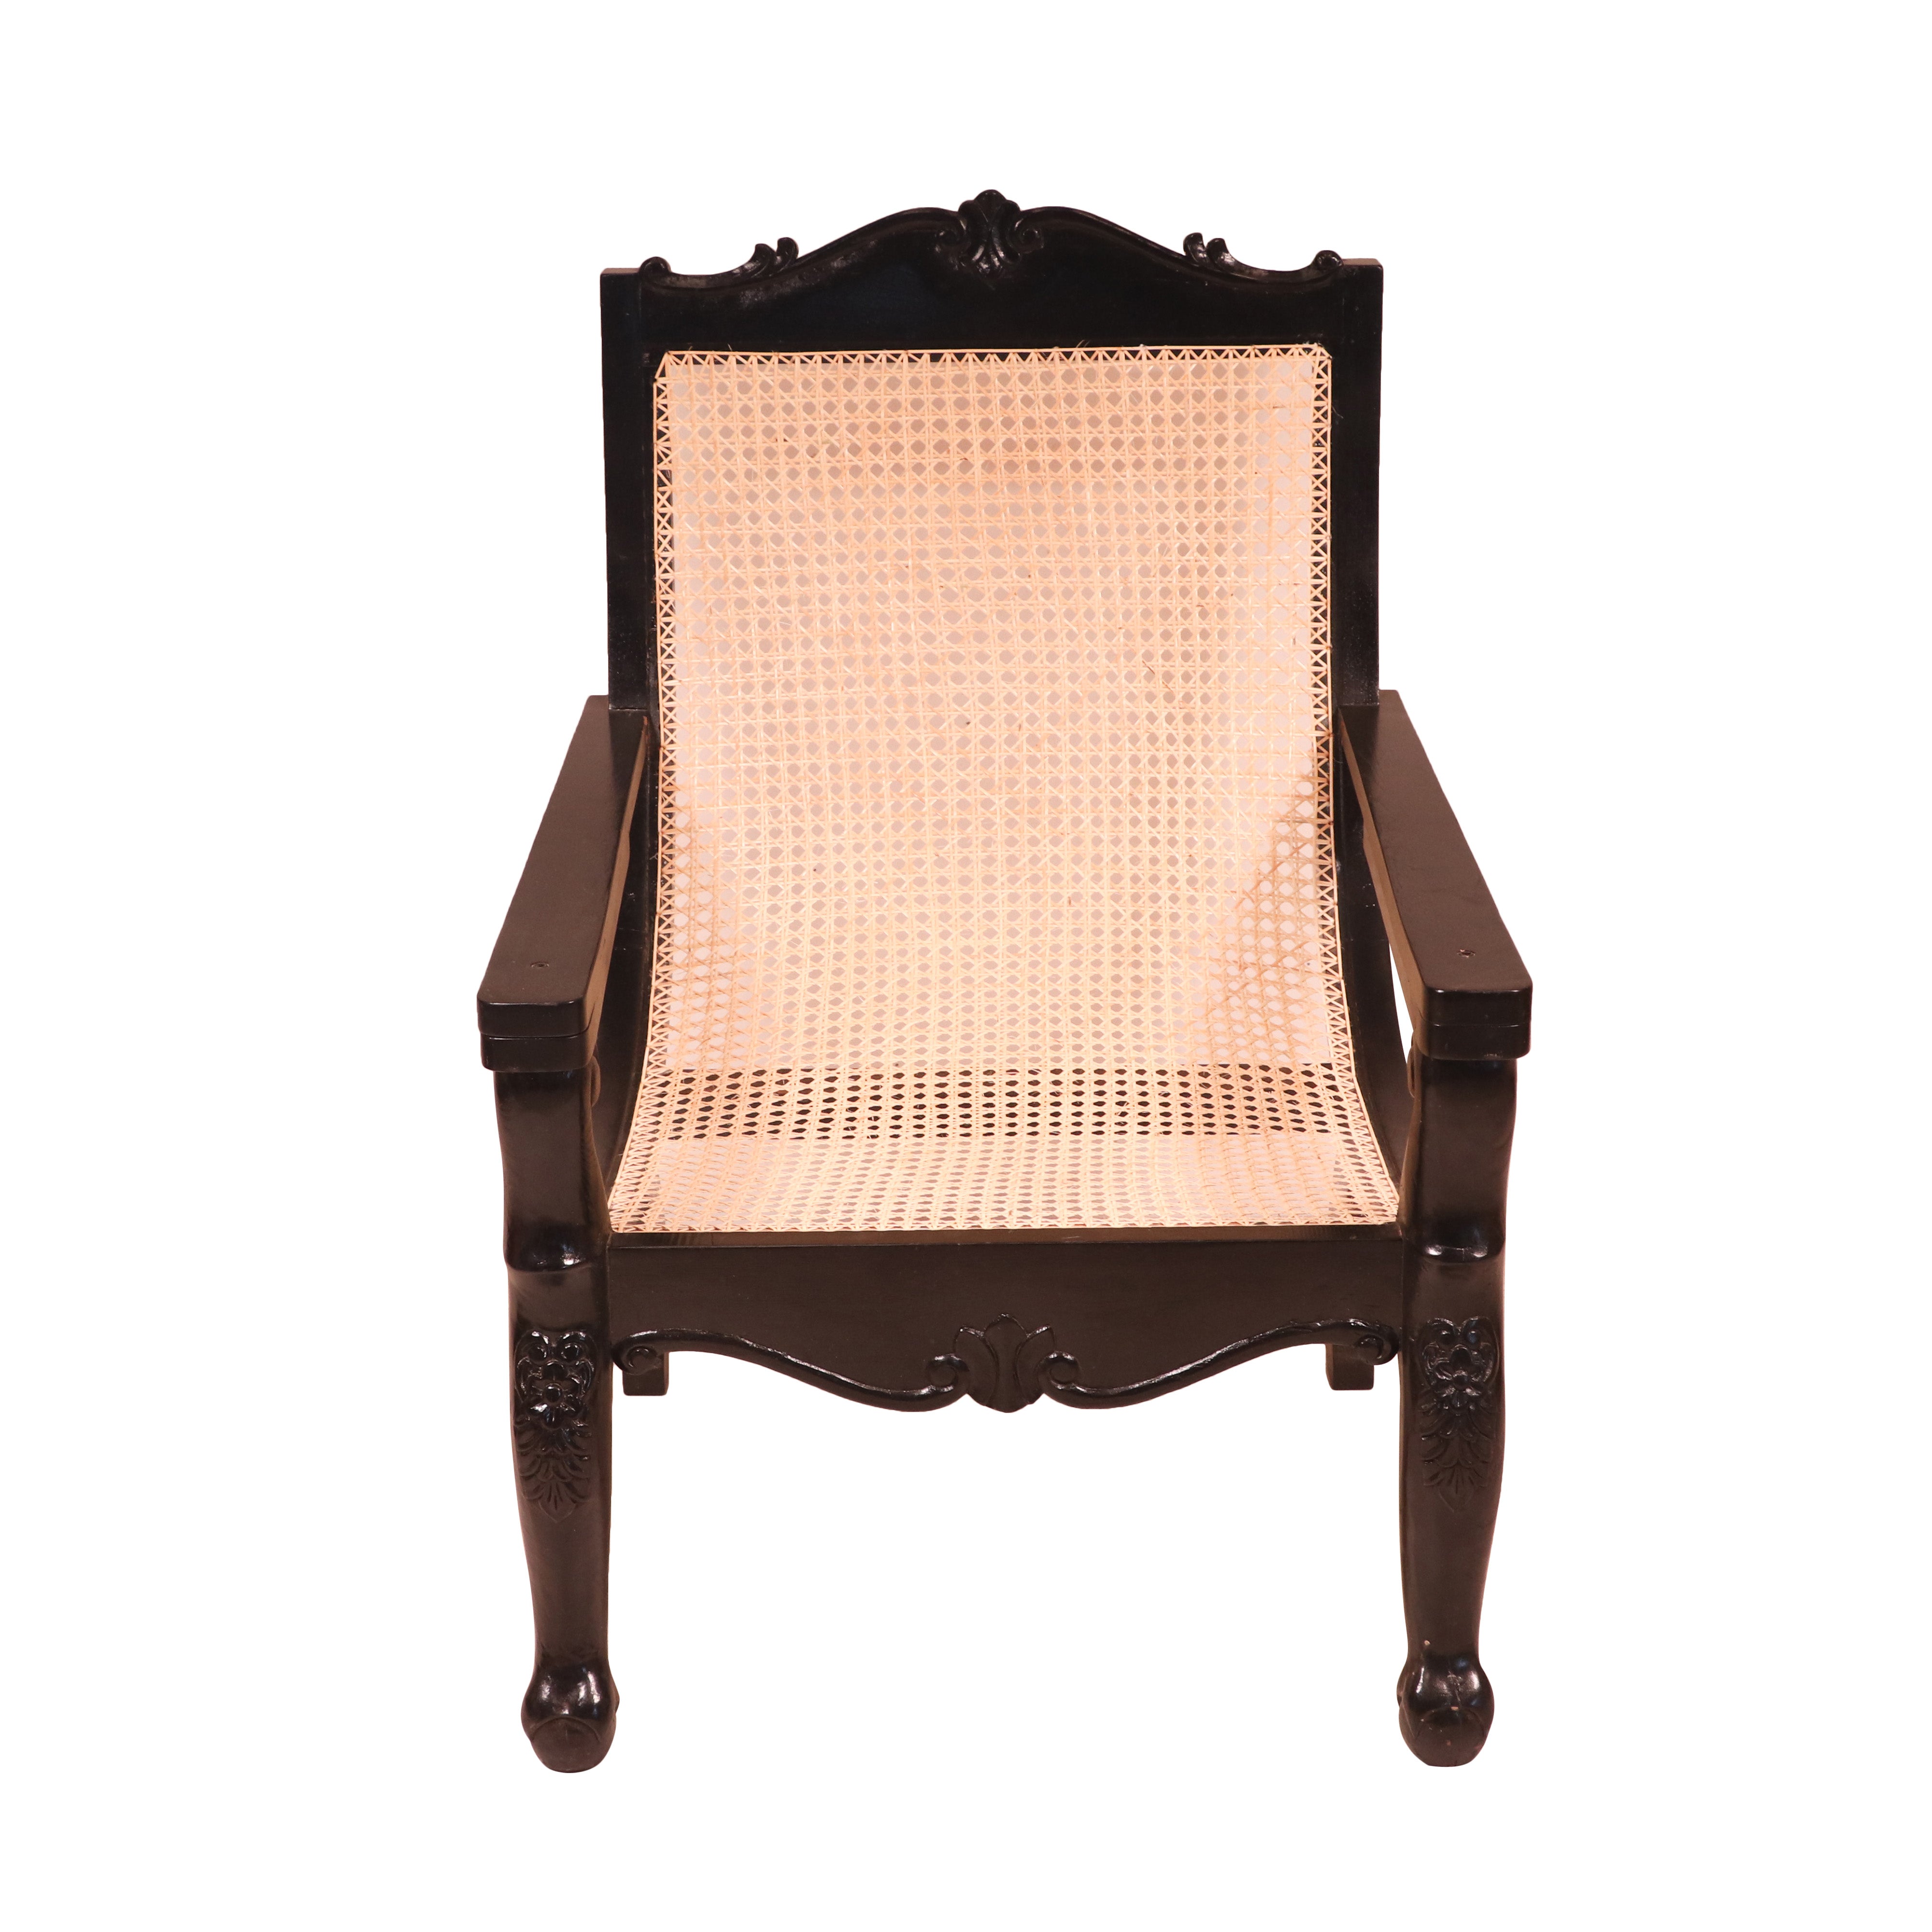 Dark polished Teak wood cane back easy Planters chair Easy Chair